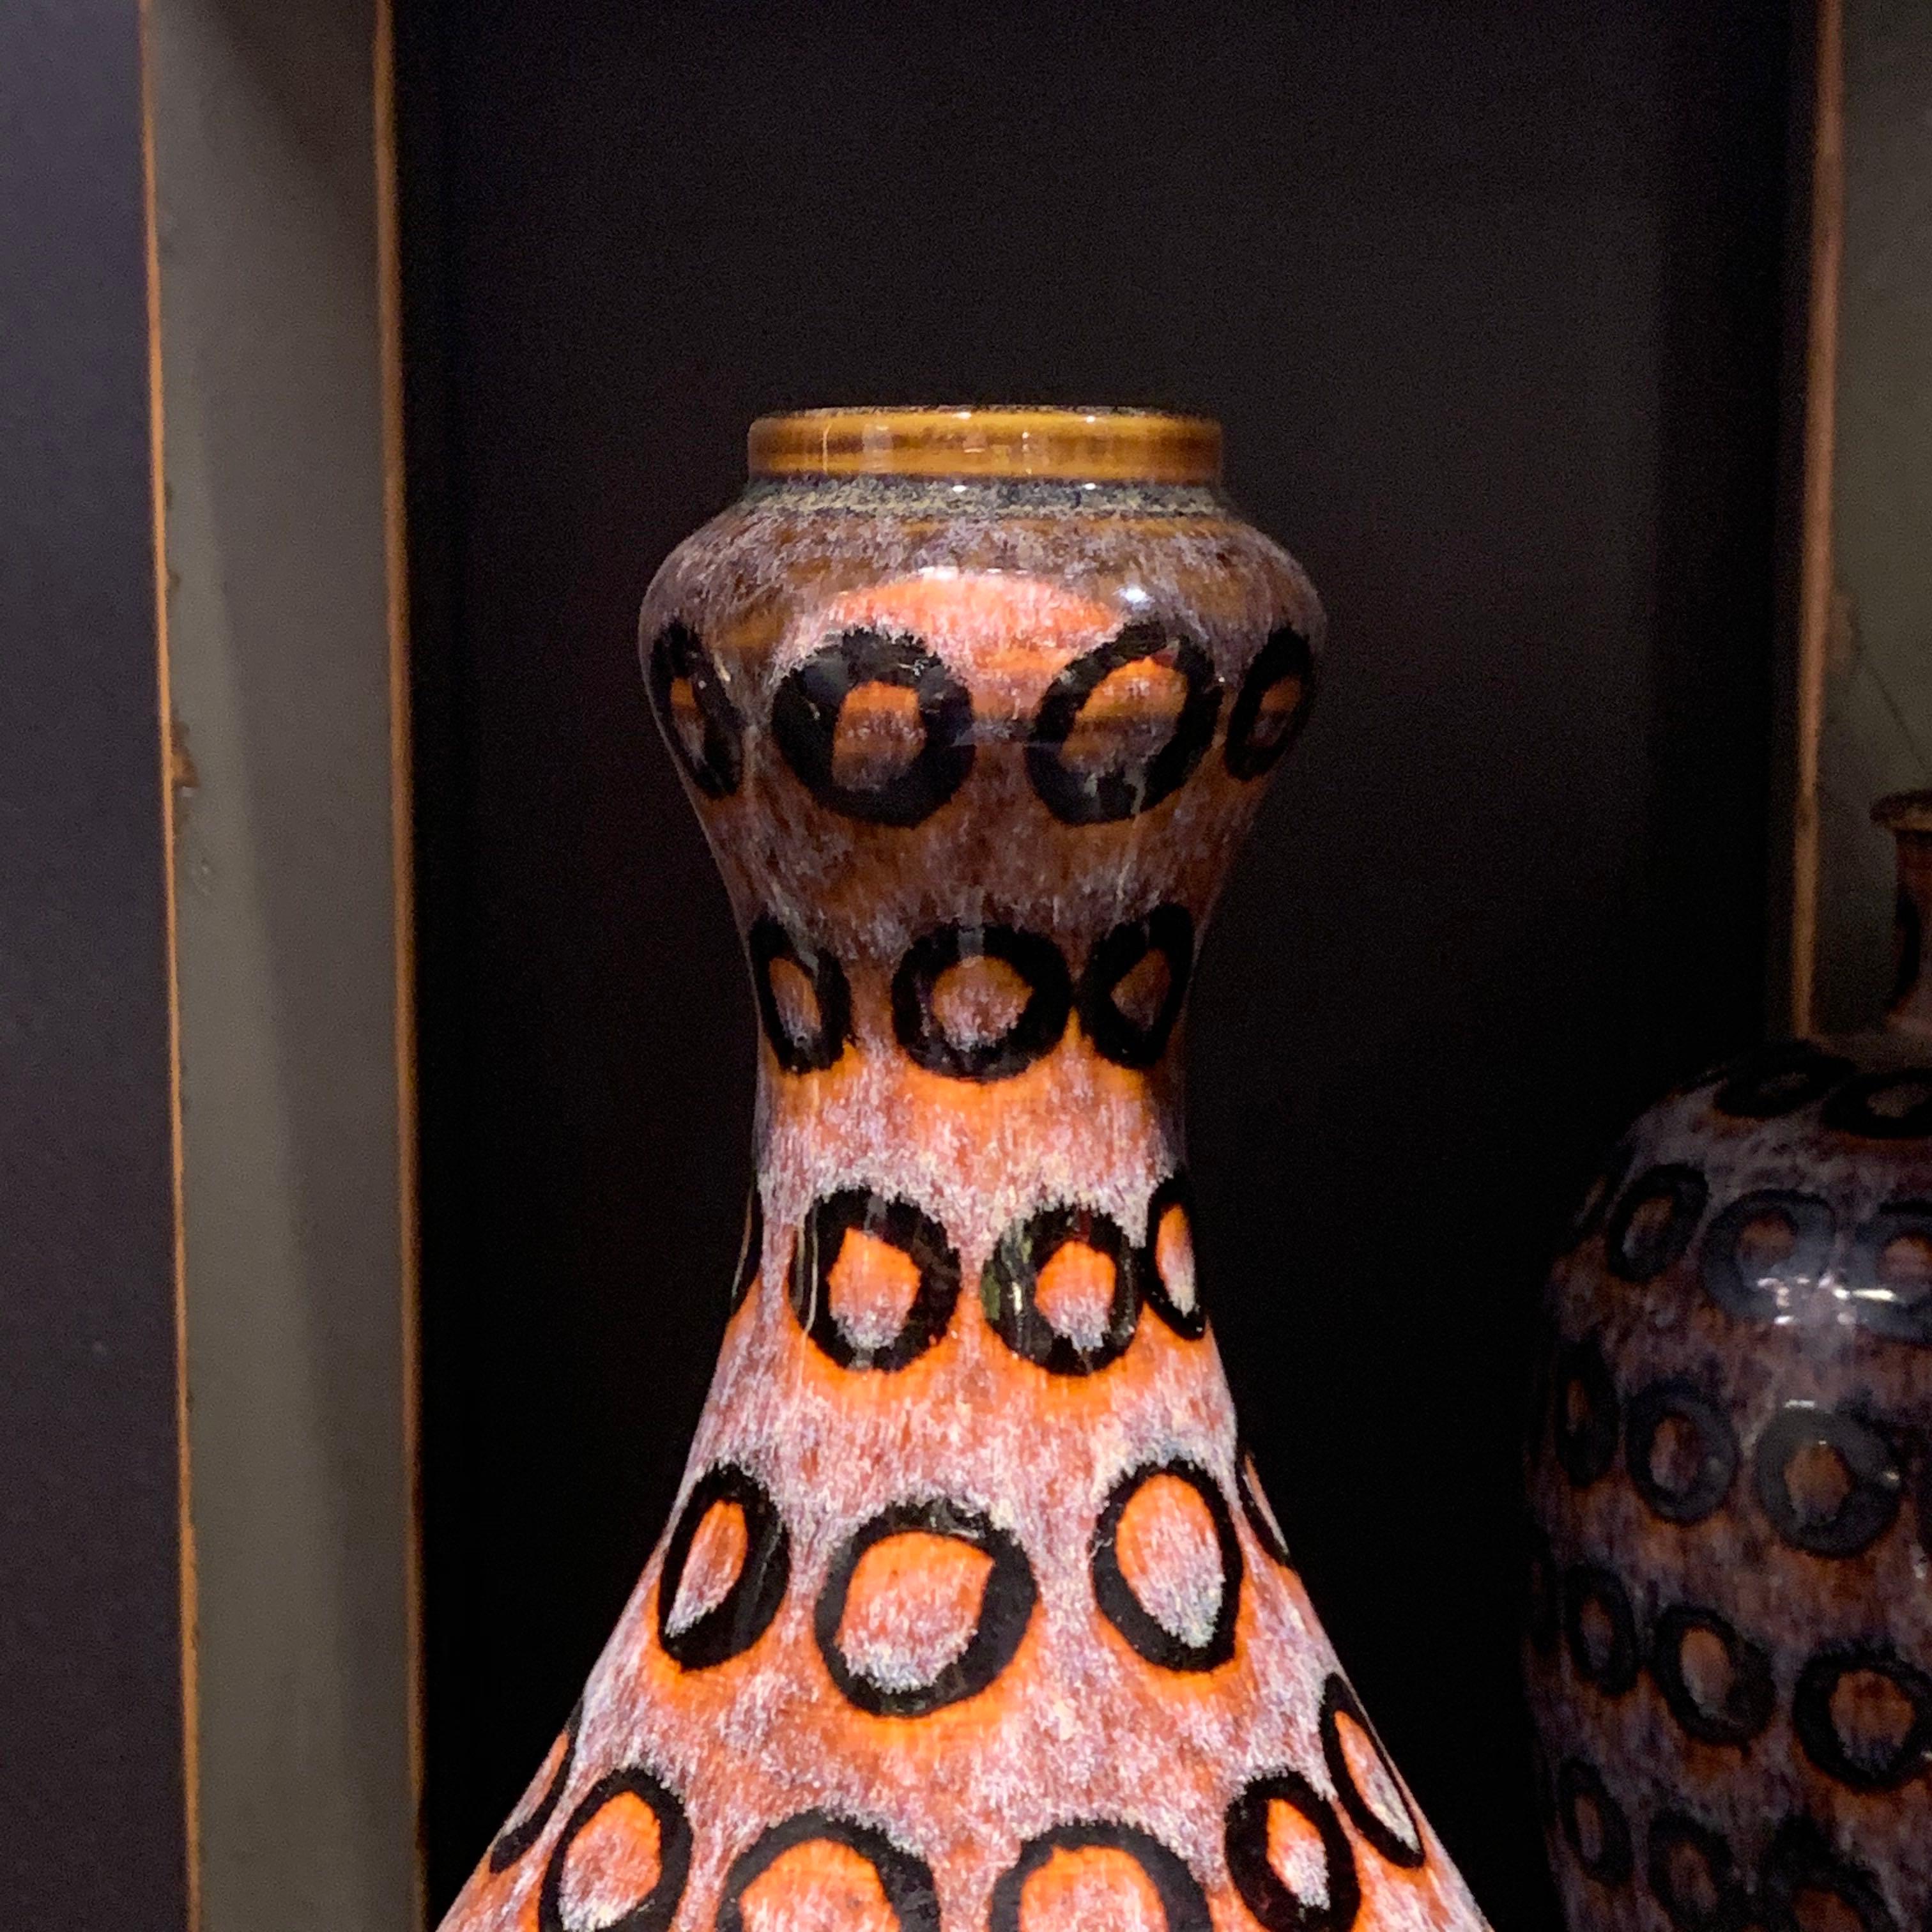 Chinese classic shape ceramic vase
Decorative black circles.
ARRIVAL TBD
 
 